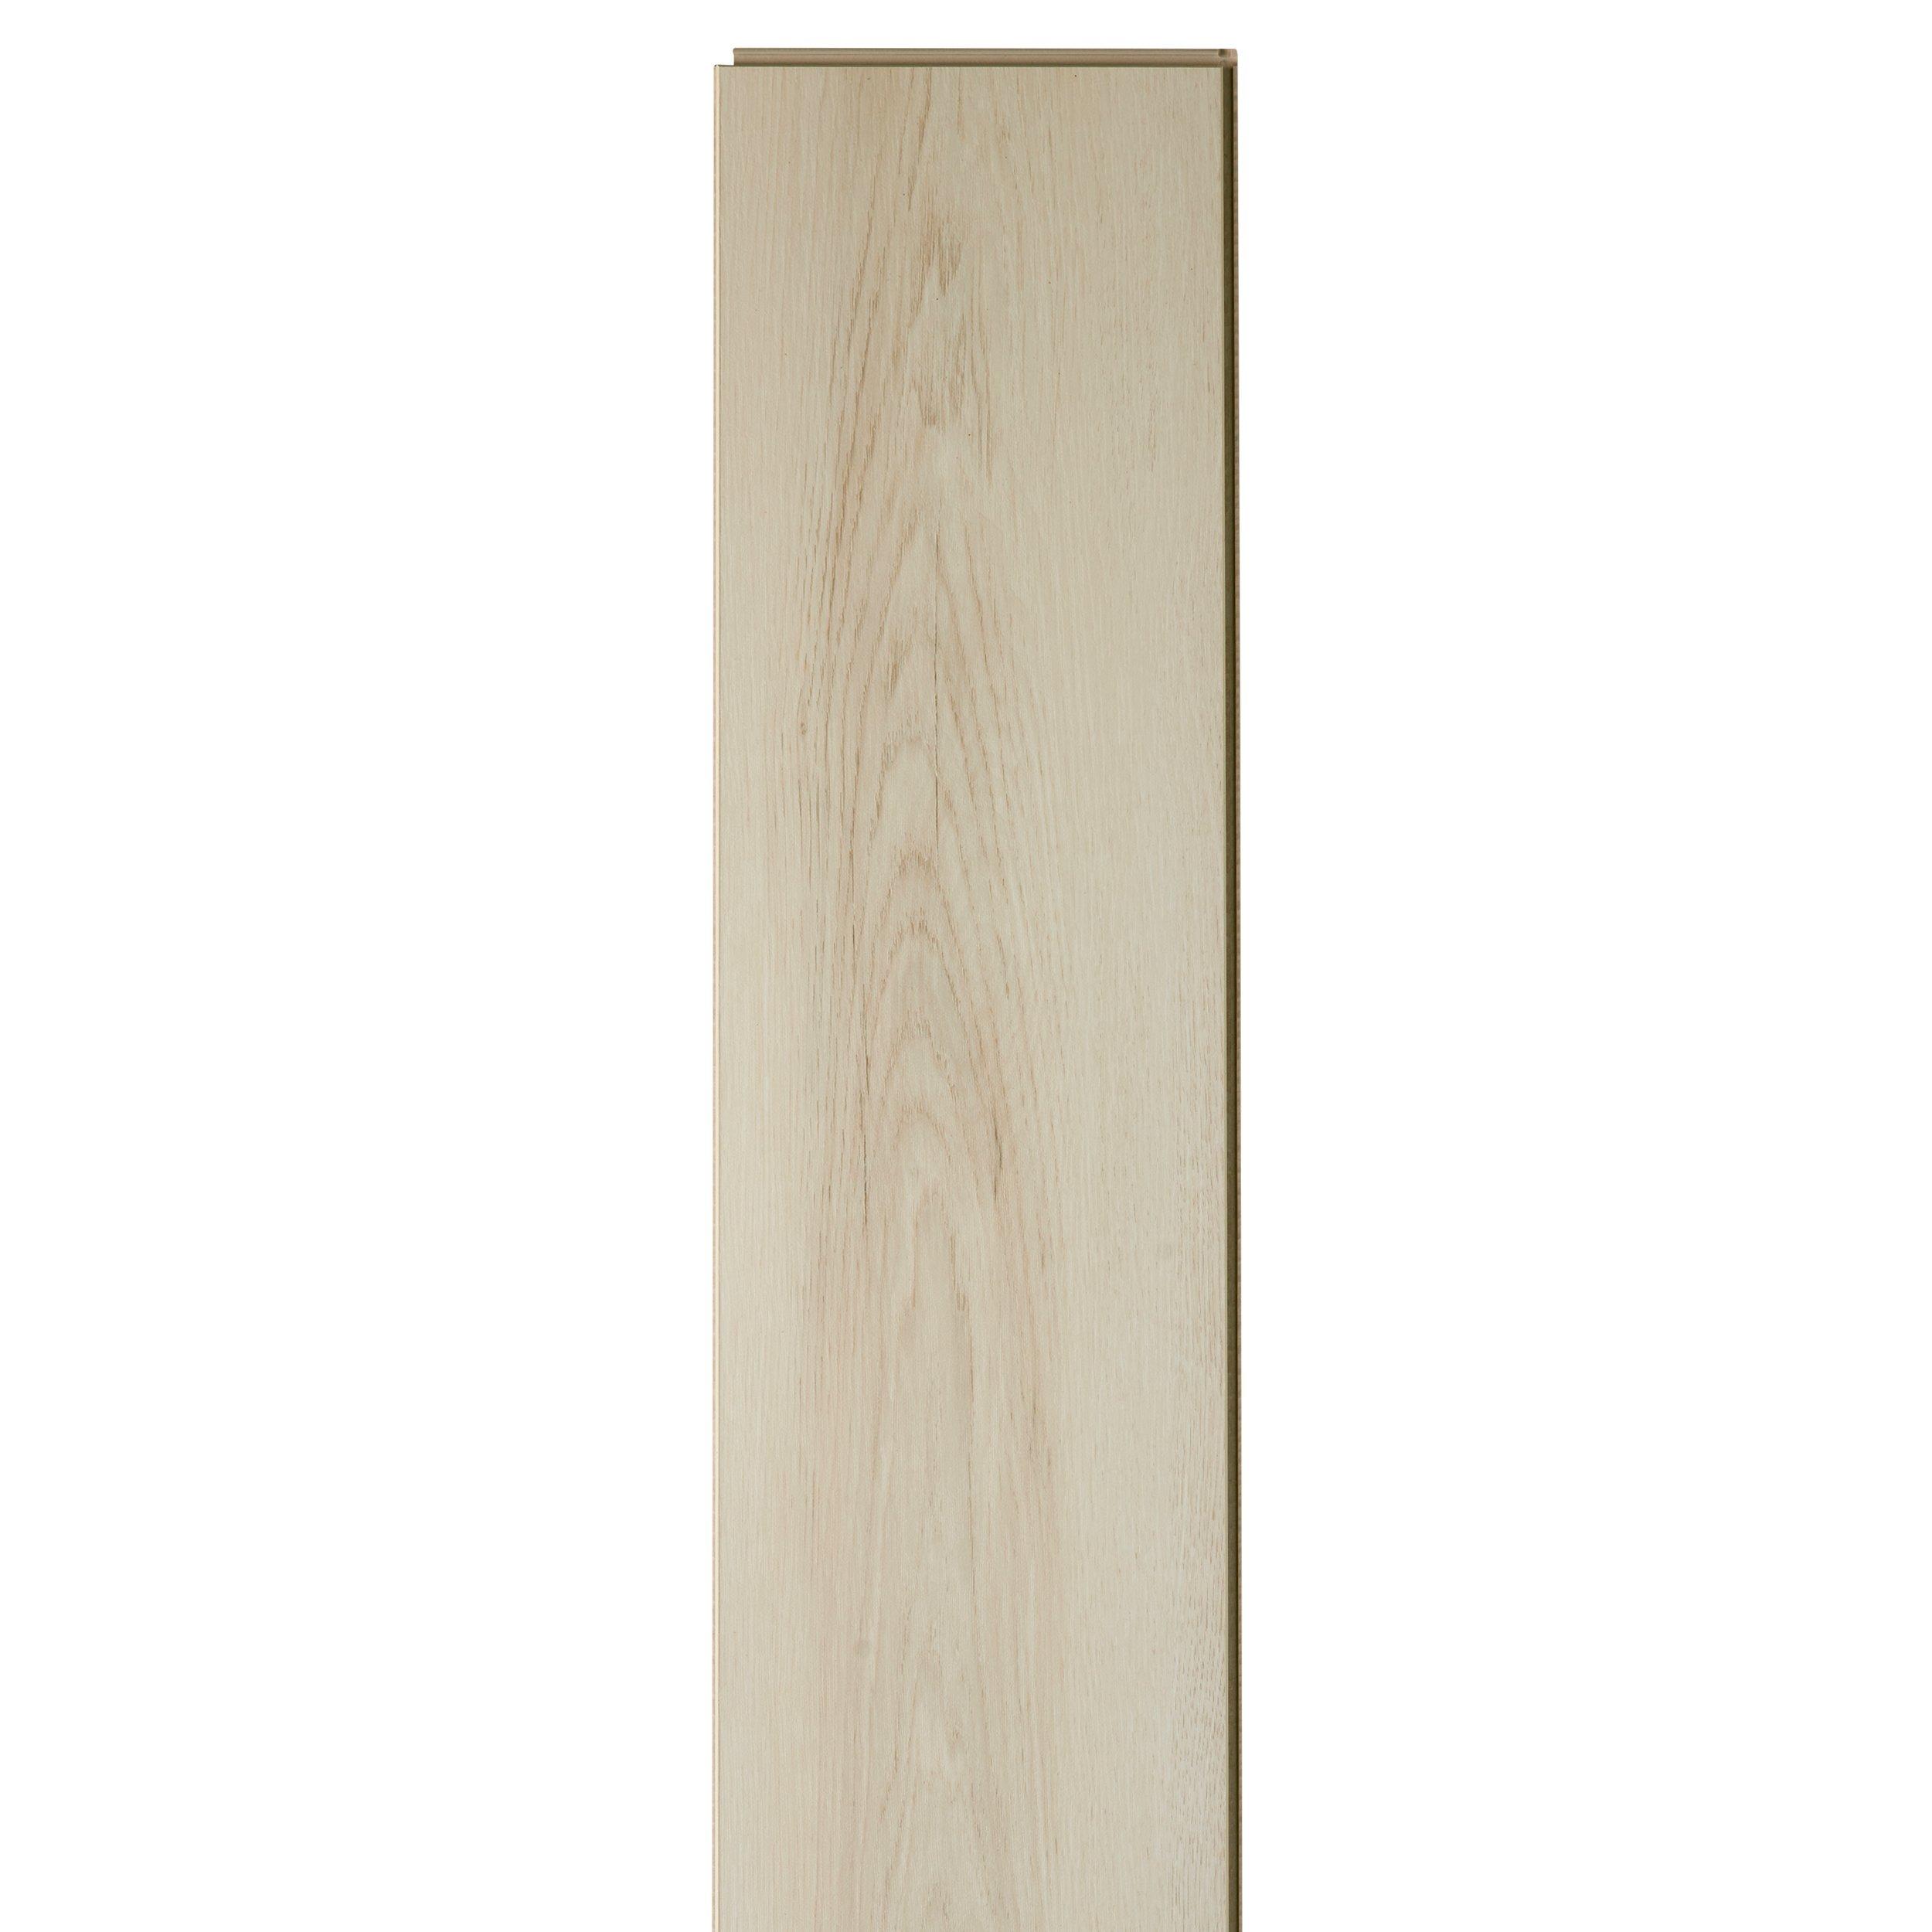 Mallard Place Rigid Core Luxury Vinyl Plank - Cork Back